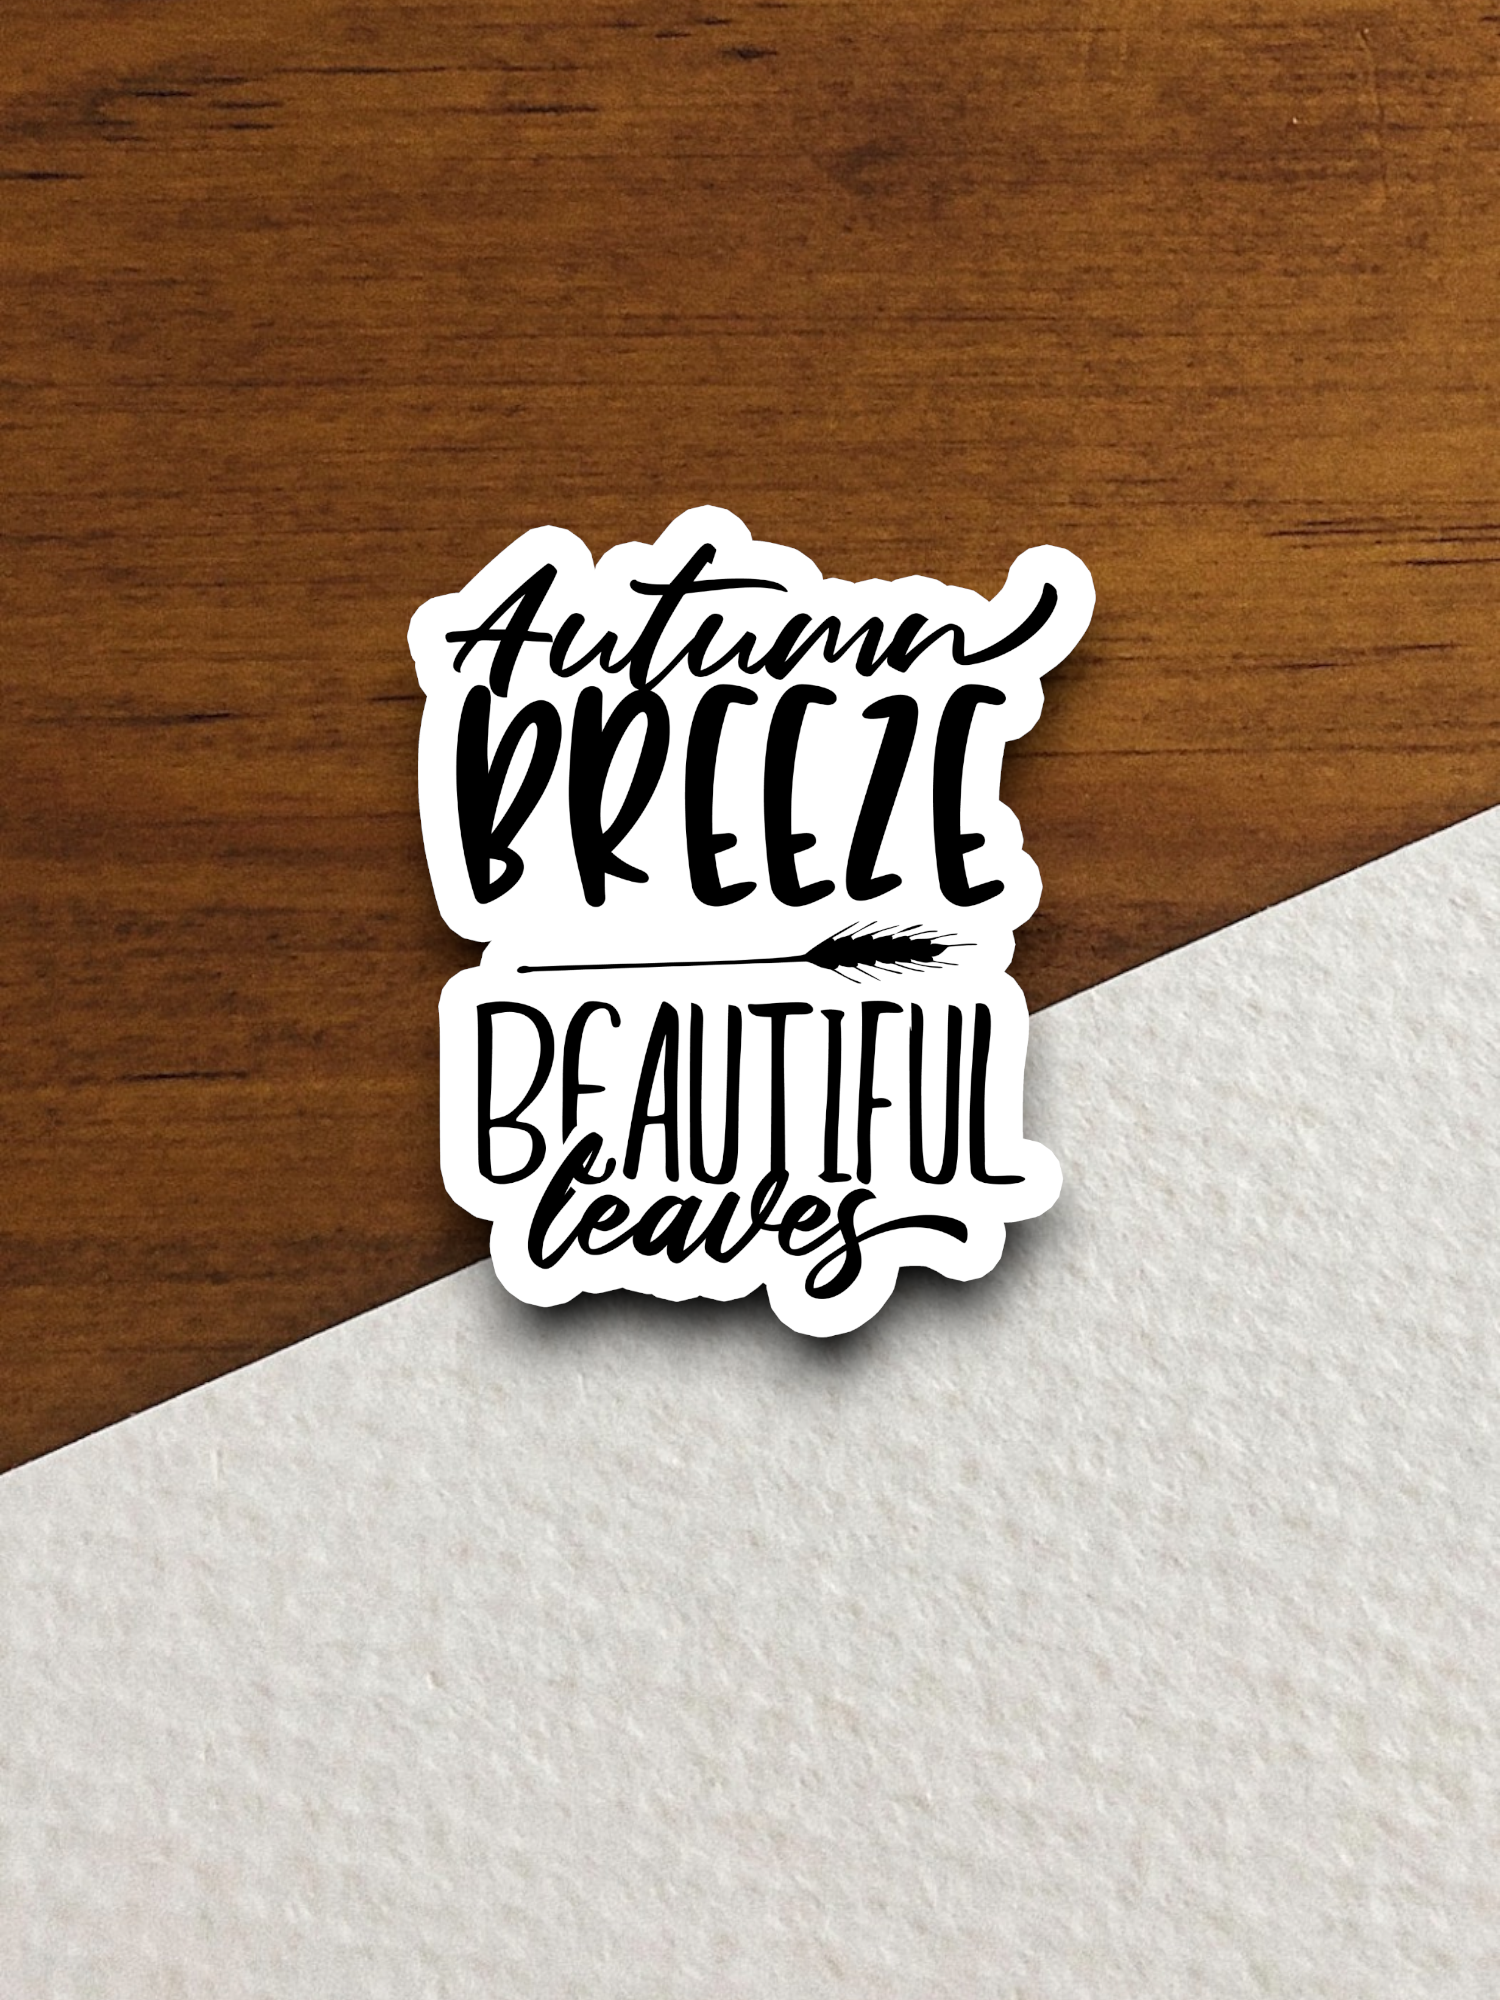 Autumn Breeze Beautiful Leaves Sticker